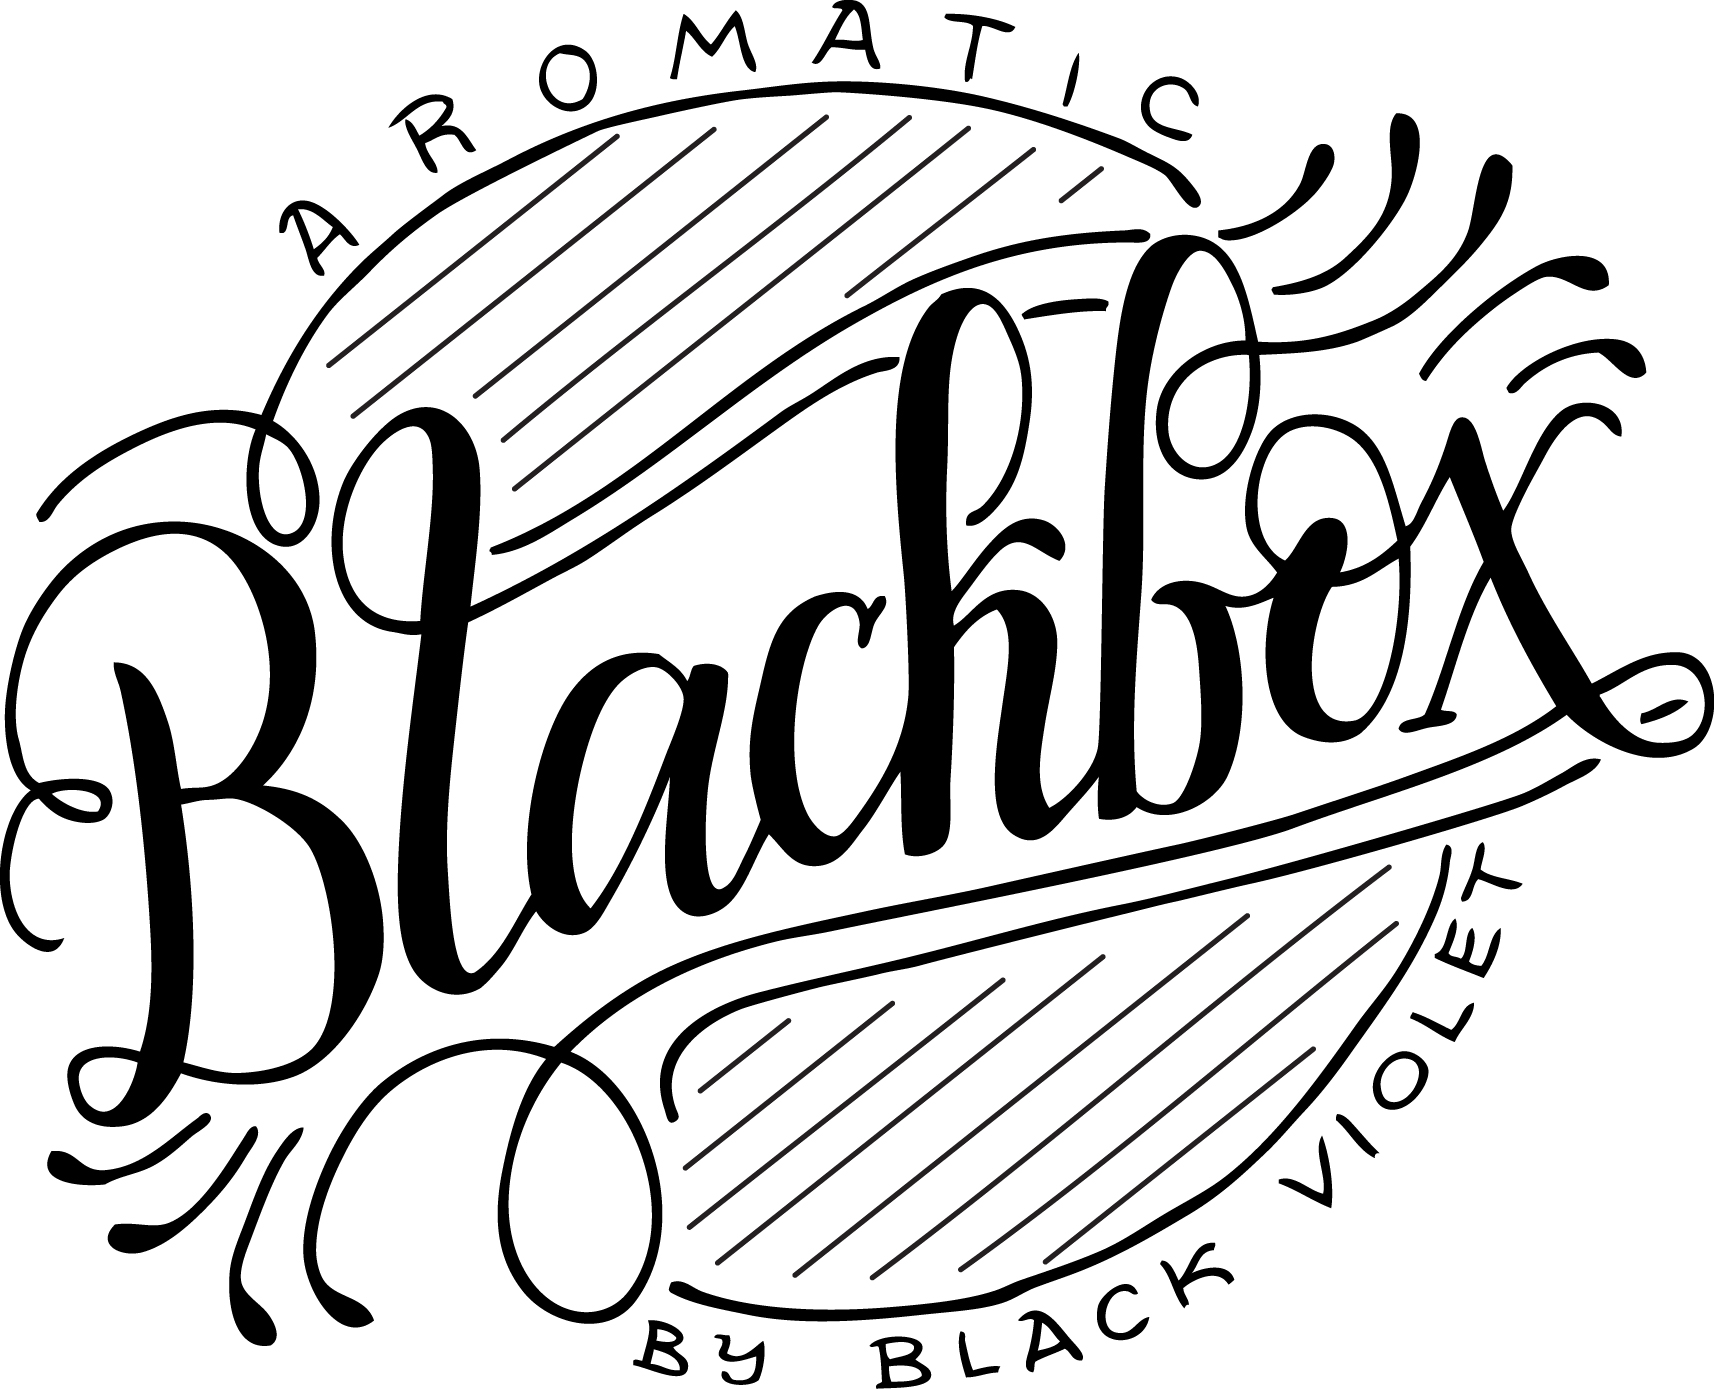 Aromatic Blackbox